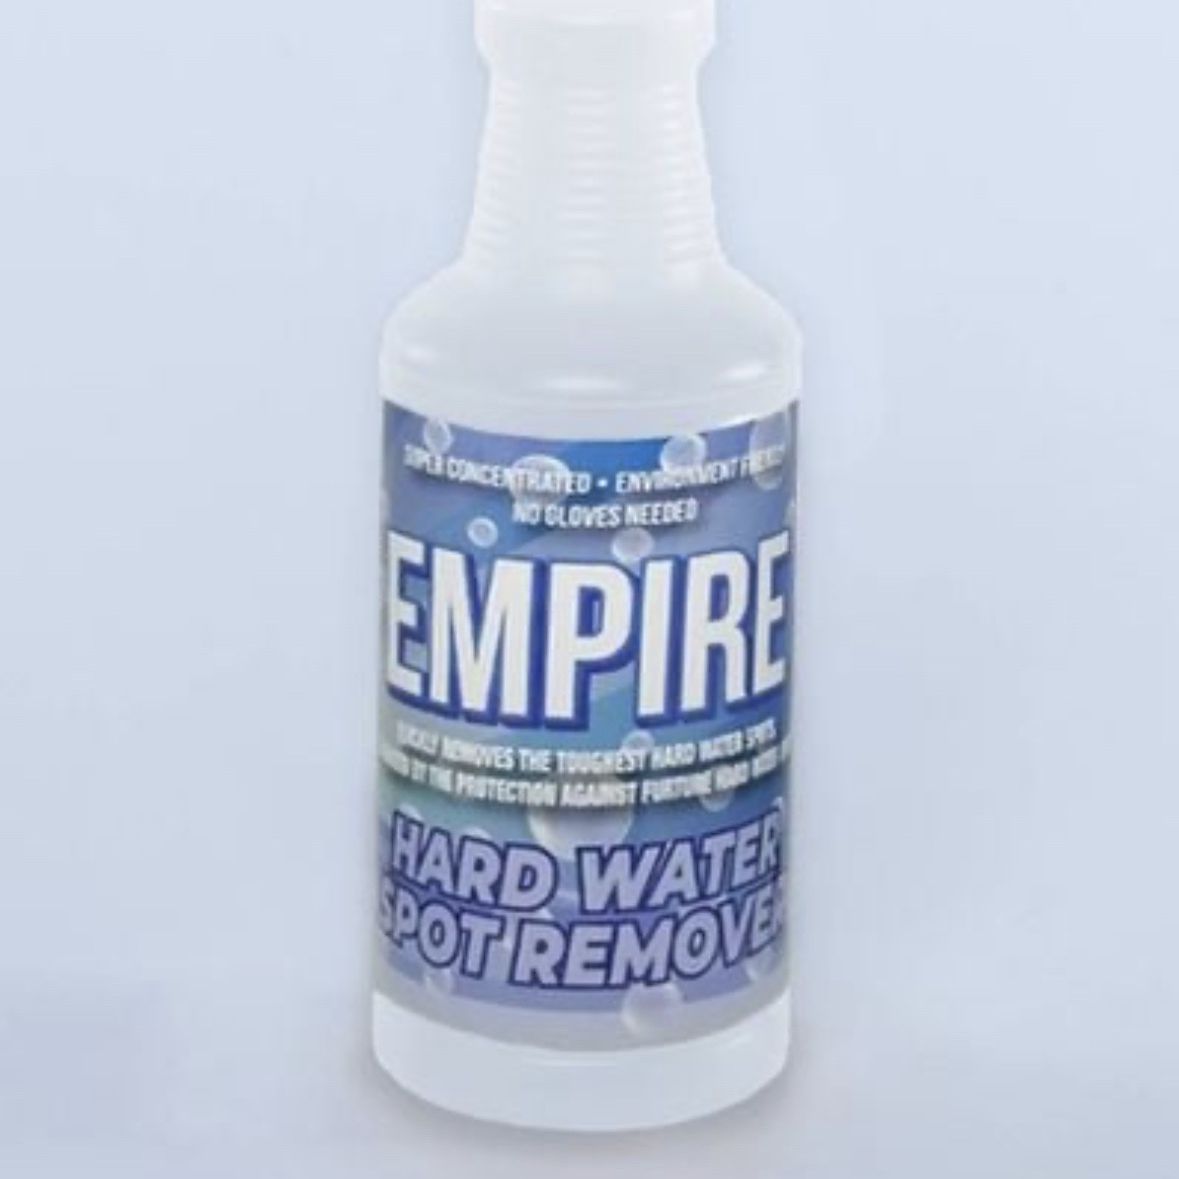 Empire Hard Water Spot Remover